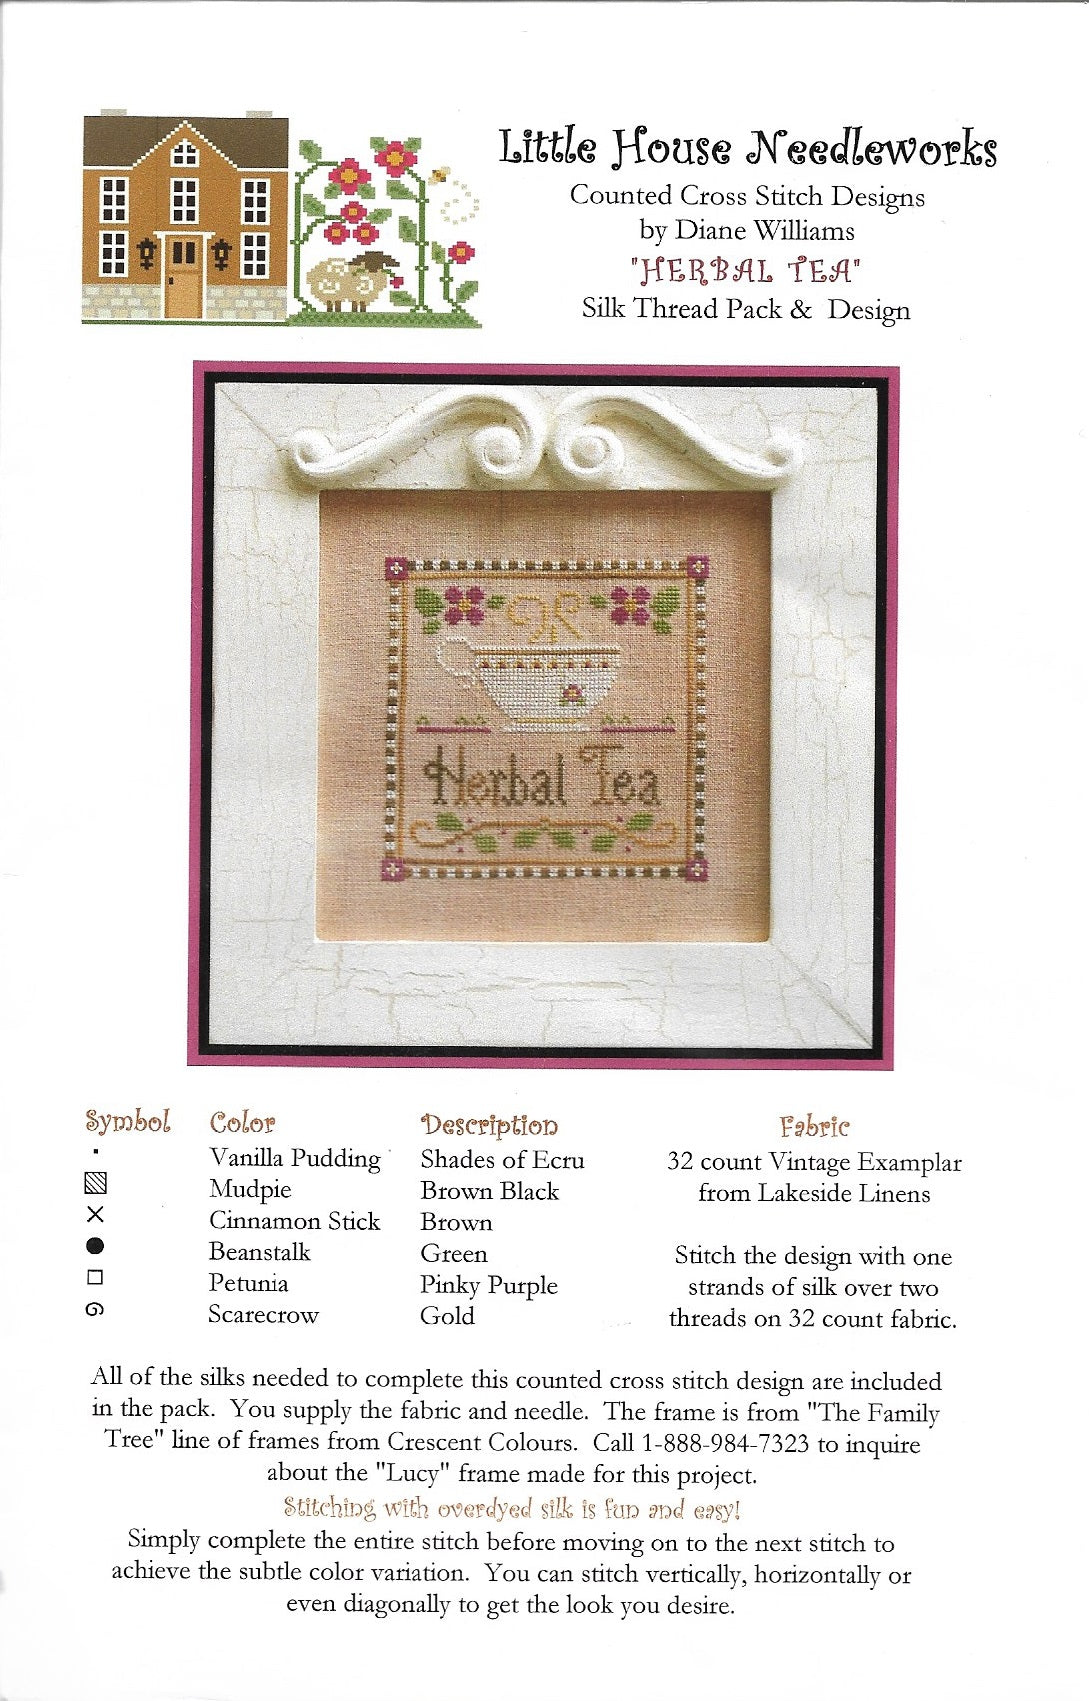 Little House Needlework Herbal Tea cross stitch pattern